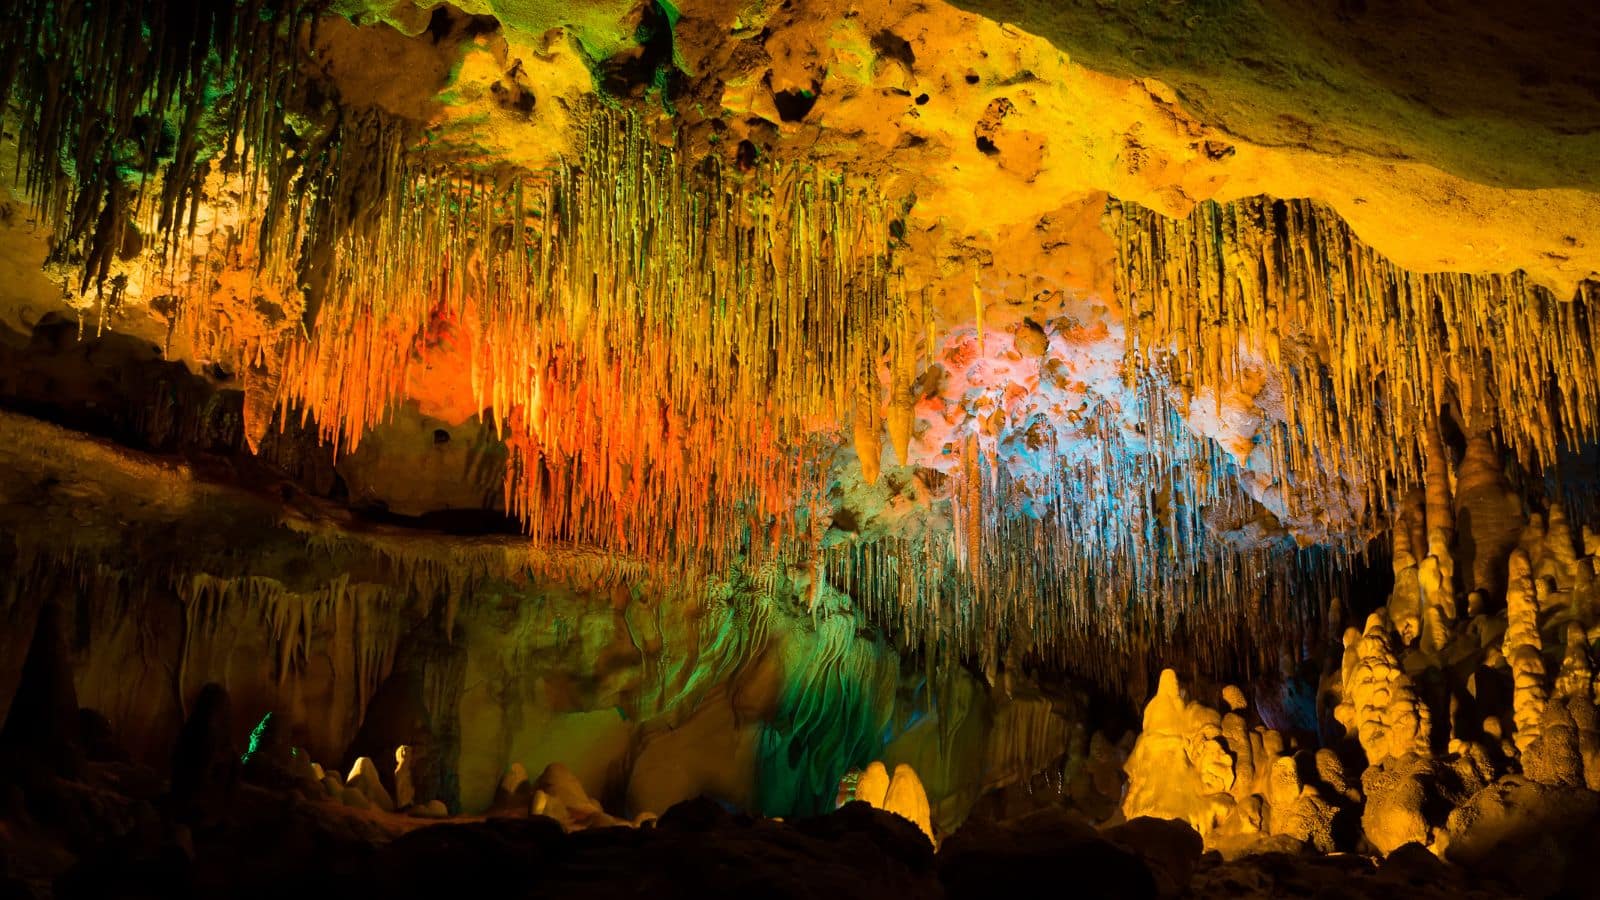 the Florida Caverns State Park (Marianna)